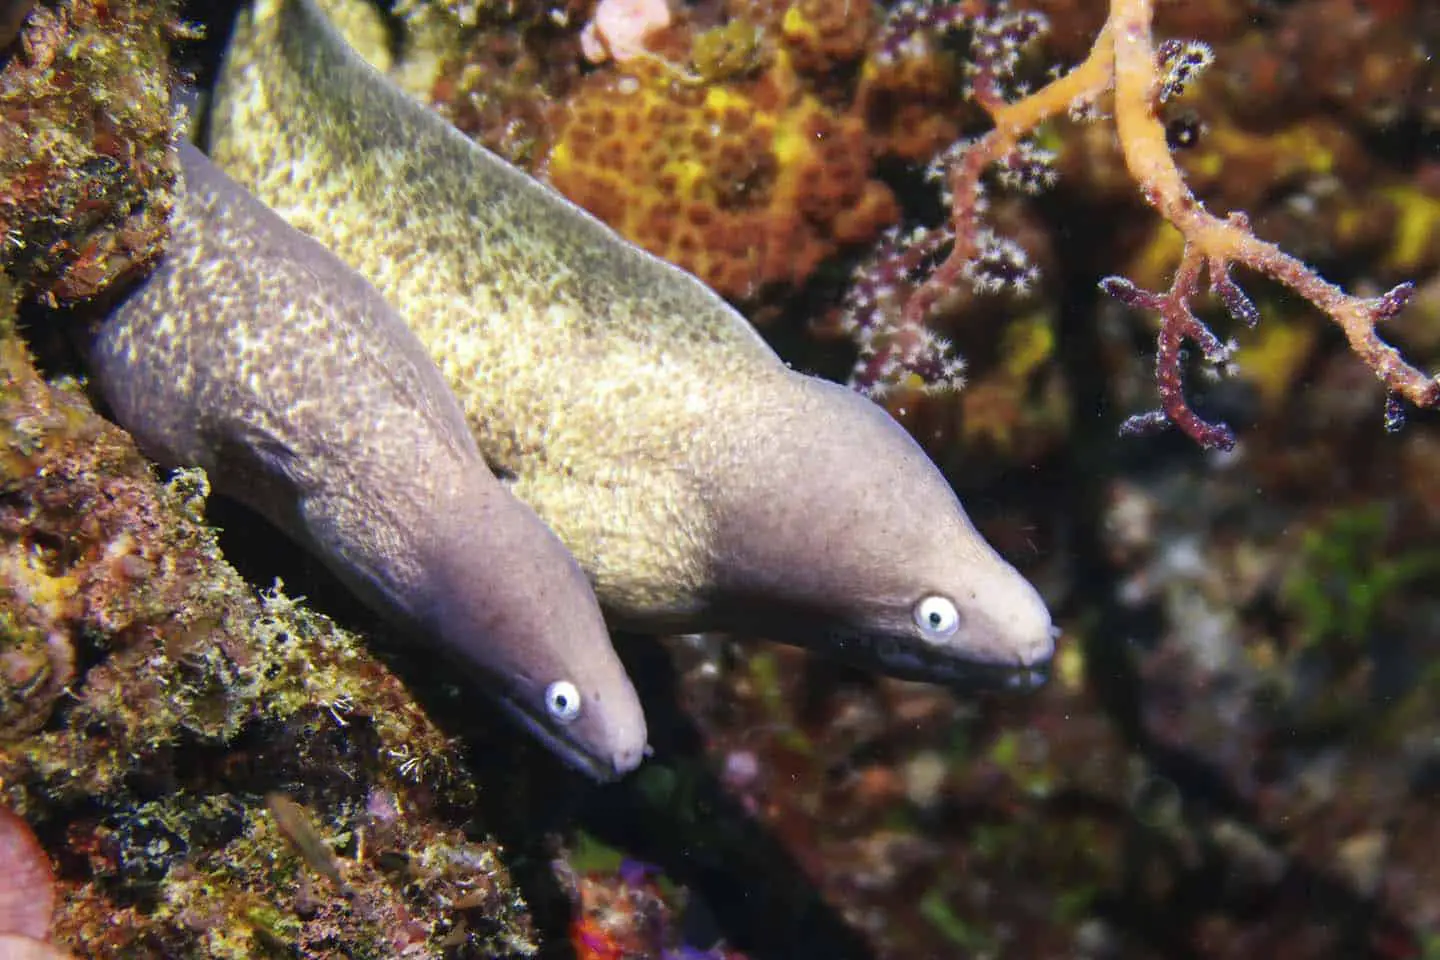 A pair of white eyed moray eels (Gymnothorax thyrsoideus) in Panglao, Bohol